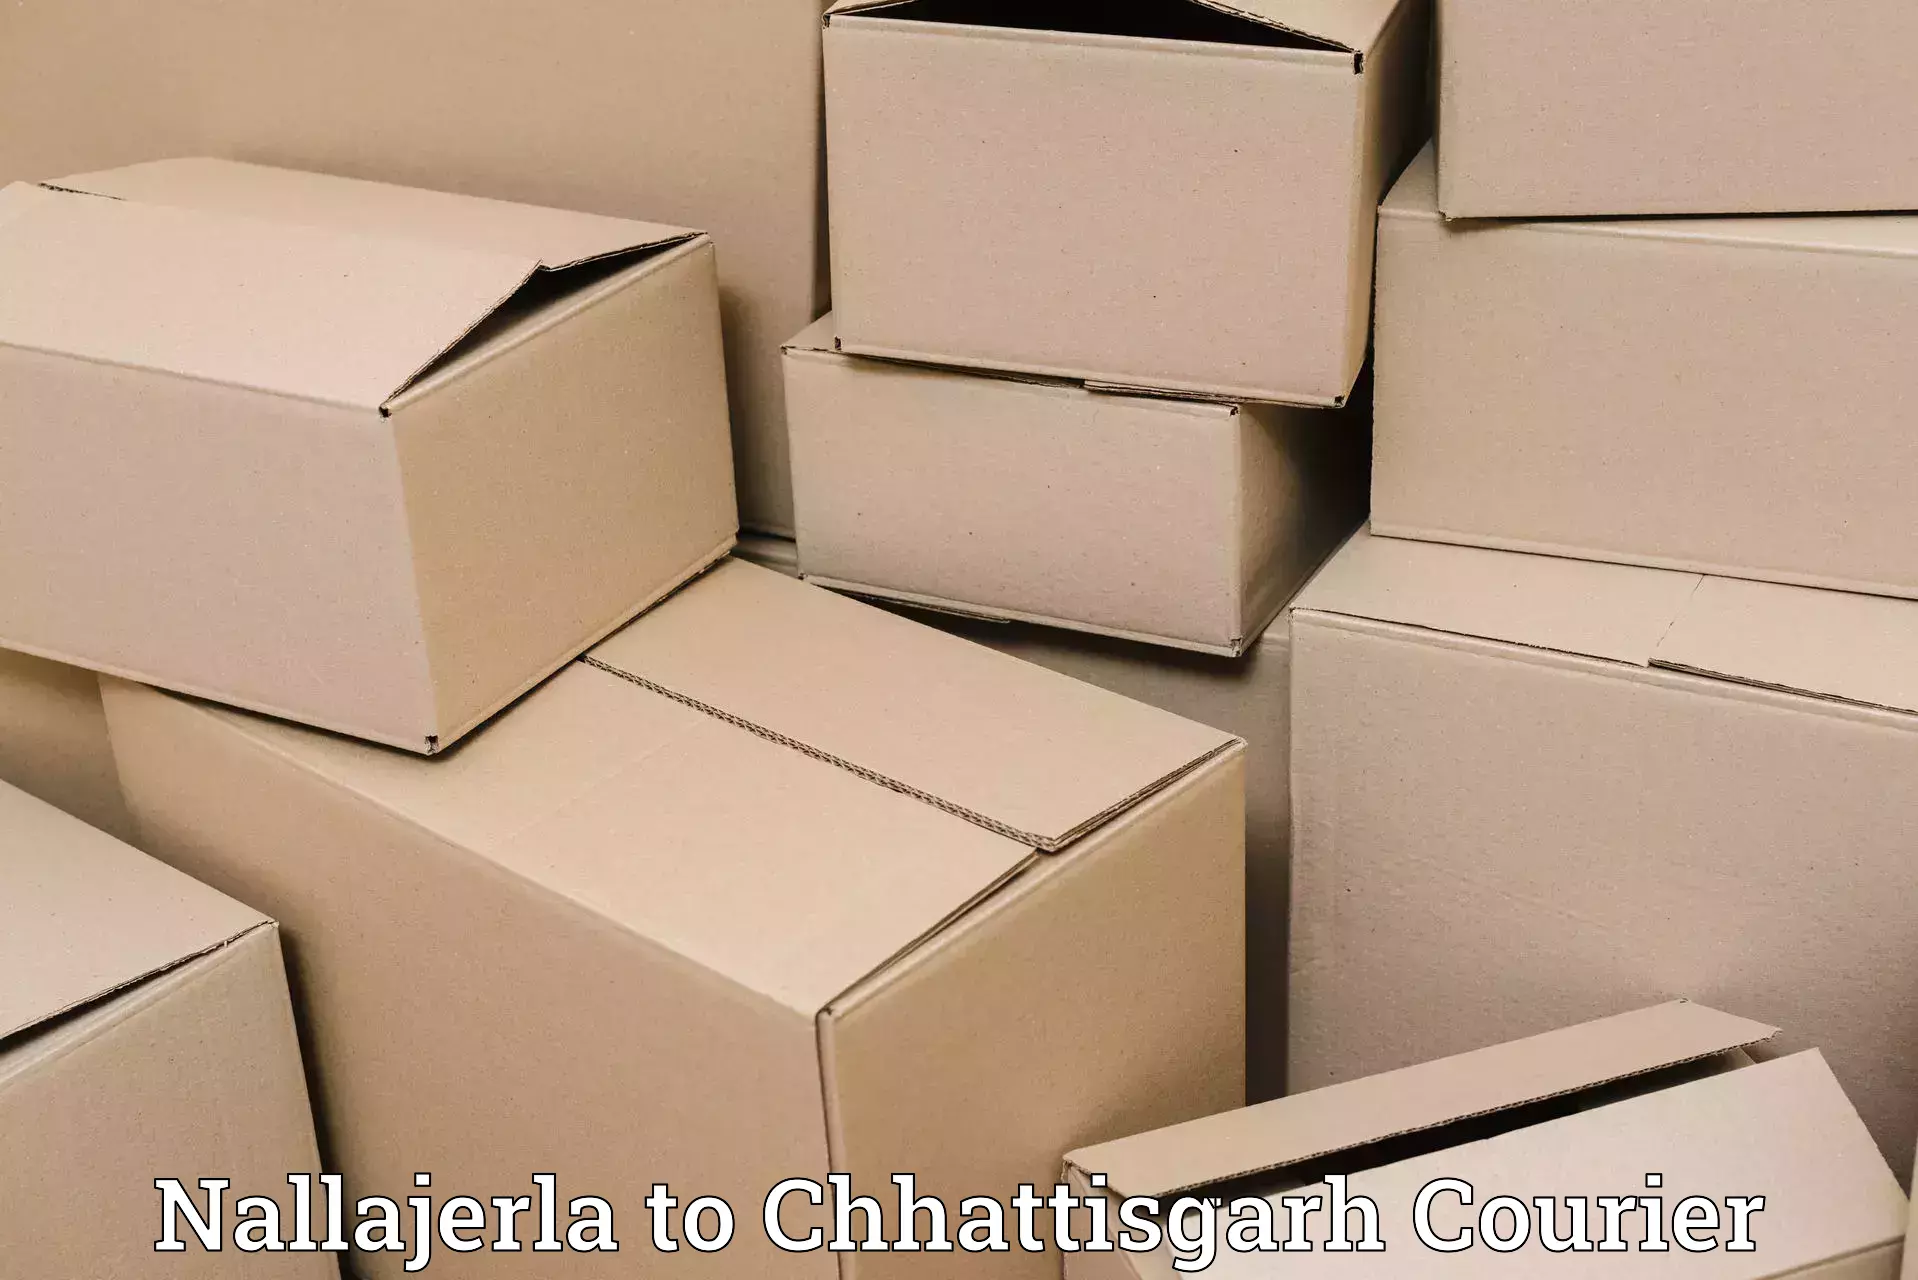 Sustainable courier practices Nallajerla to Raigarh